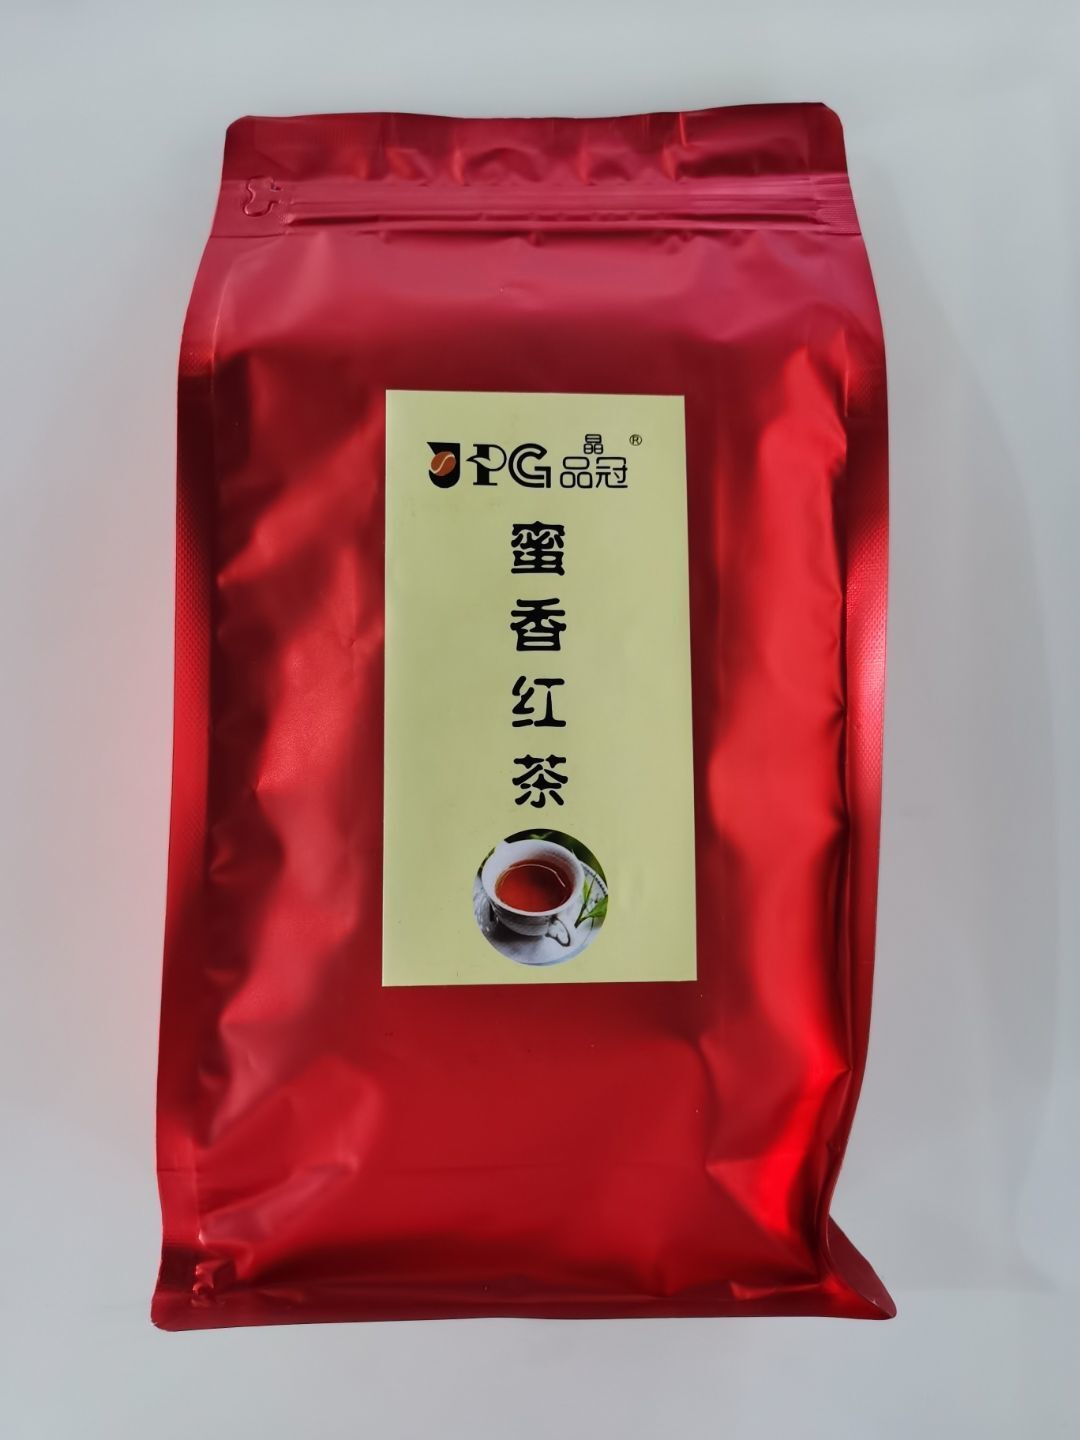 055drinks Jingping Guang Honey Aroma Red Tea